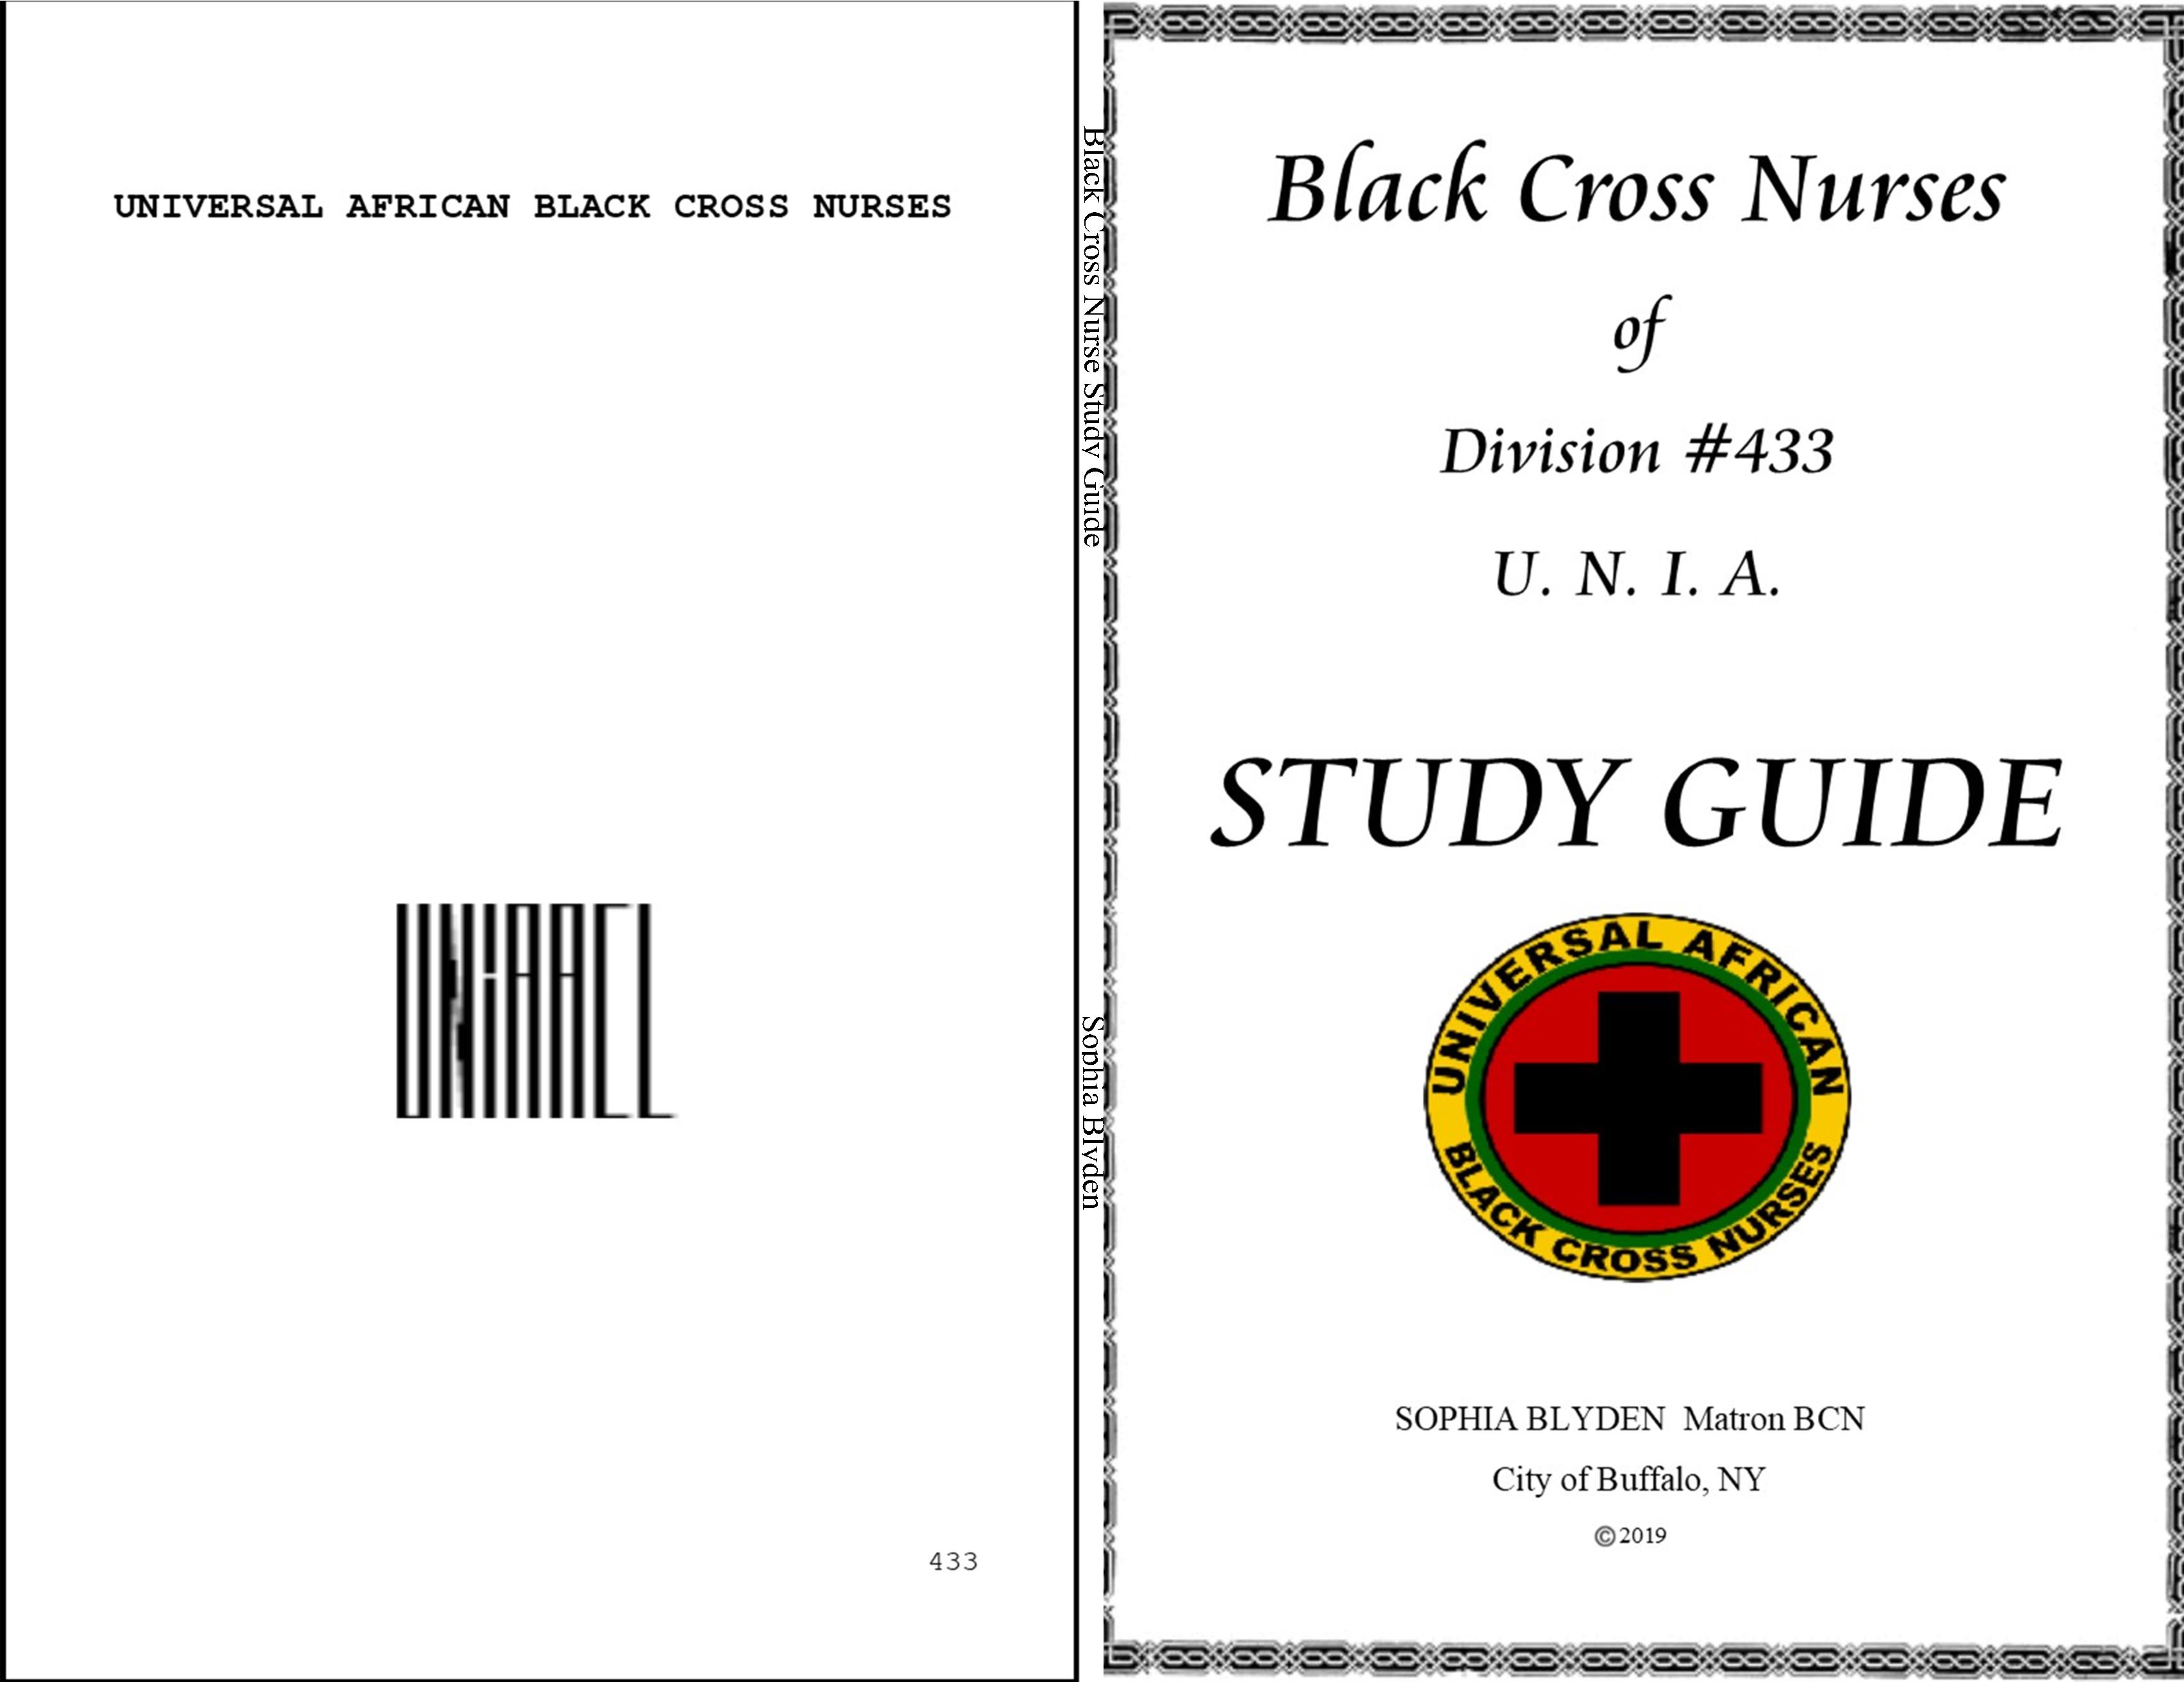 Black Cross Nurse Study Guide cover image